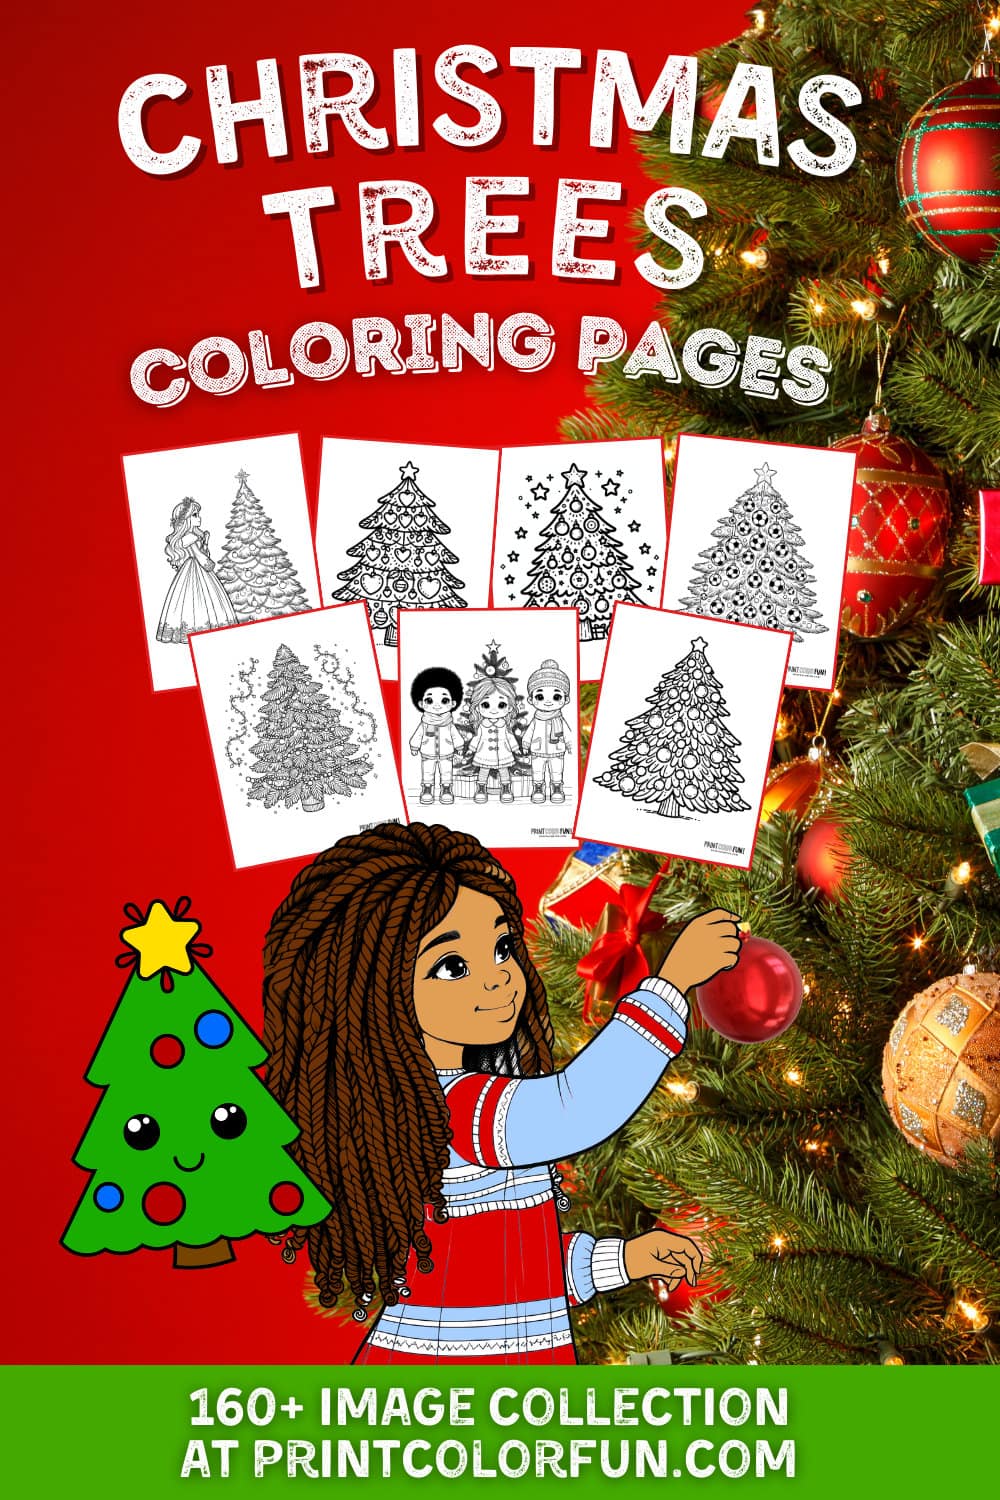 160 Christmas tree coloring pages at PrintColorFun com